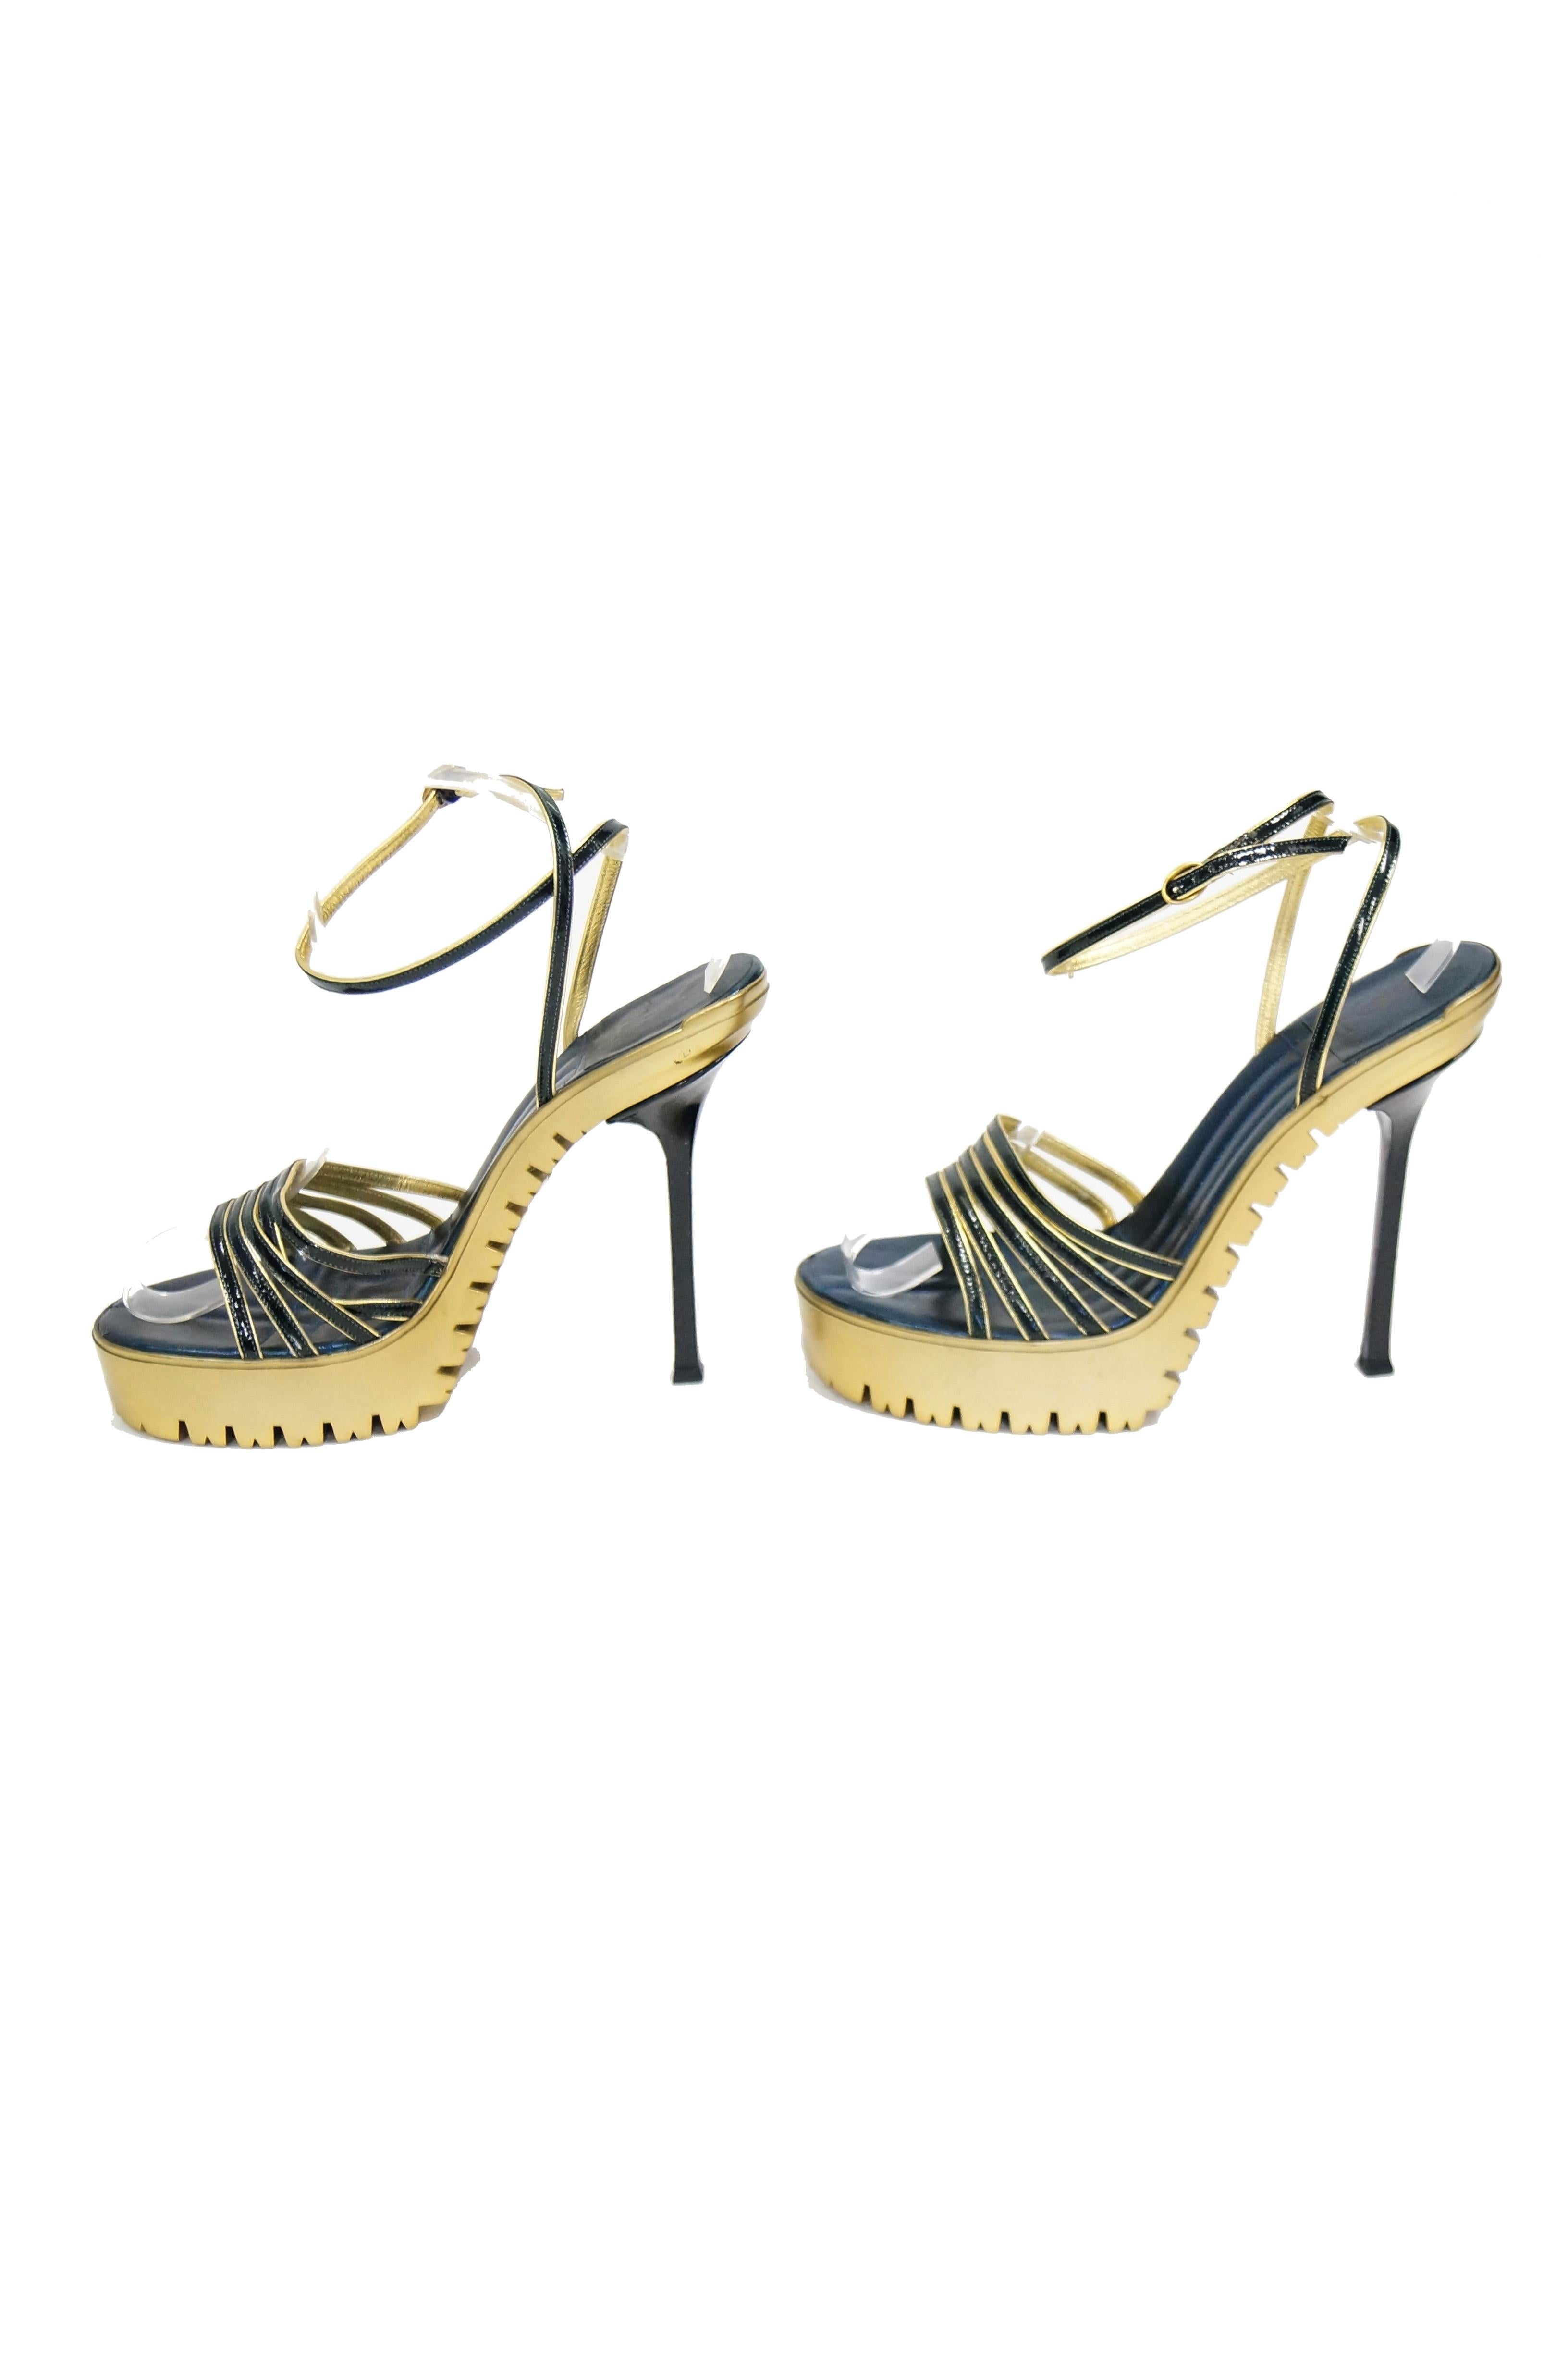 ysl gold platform heels